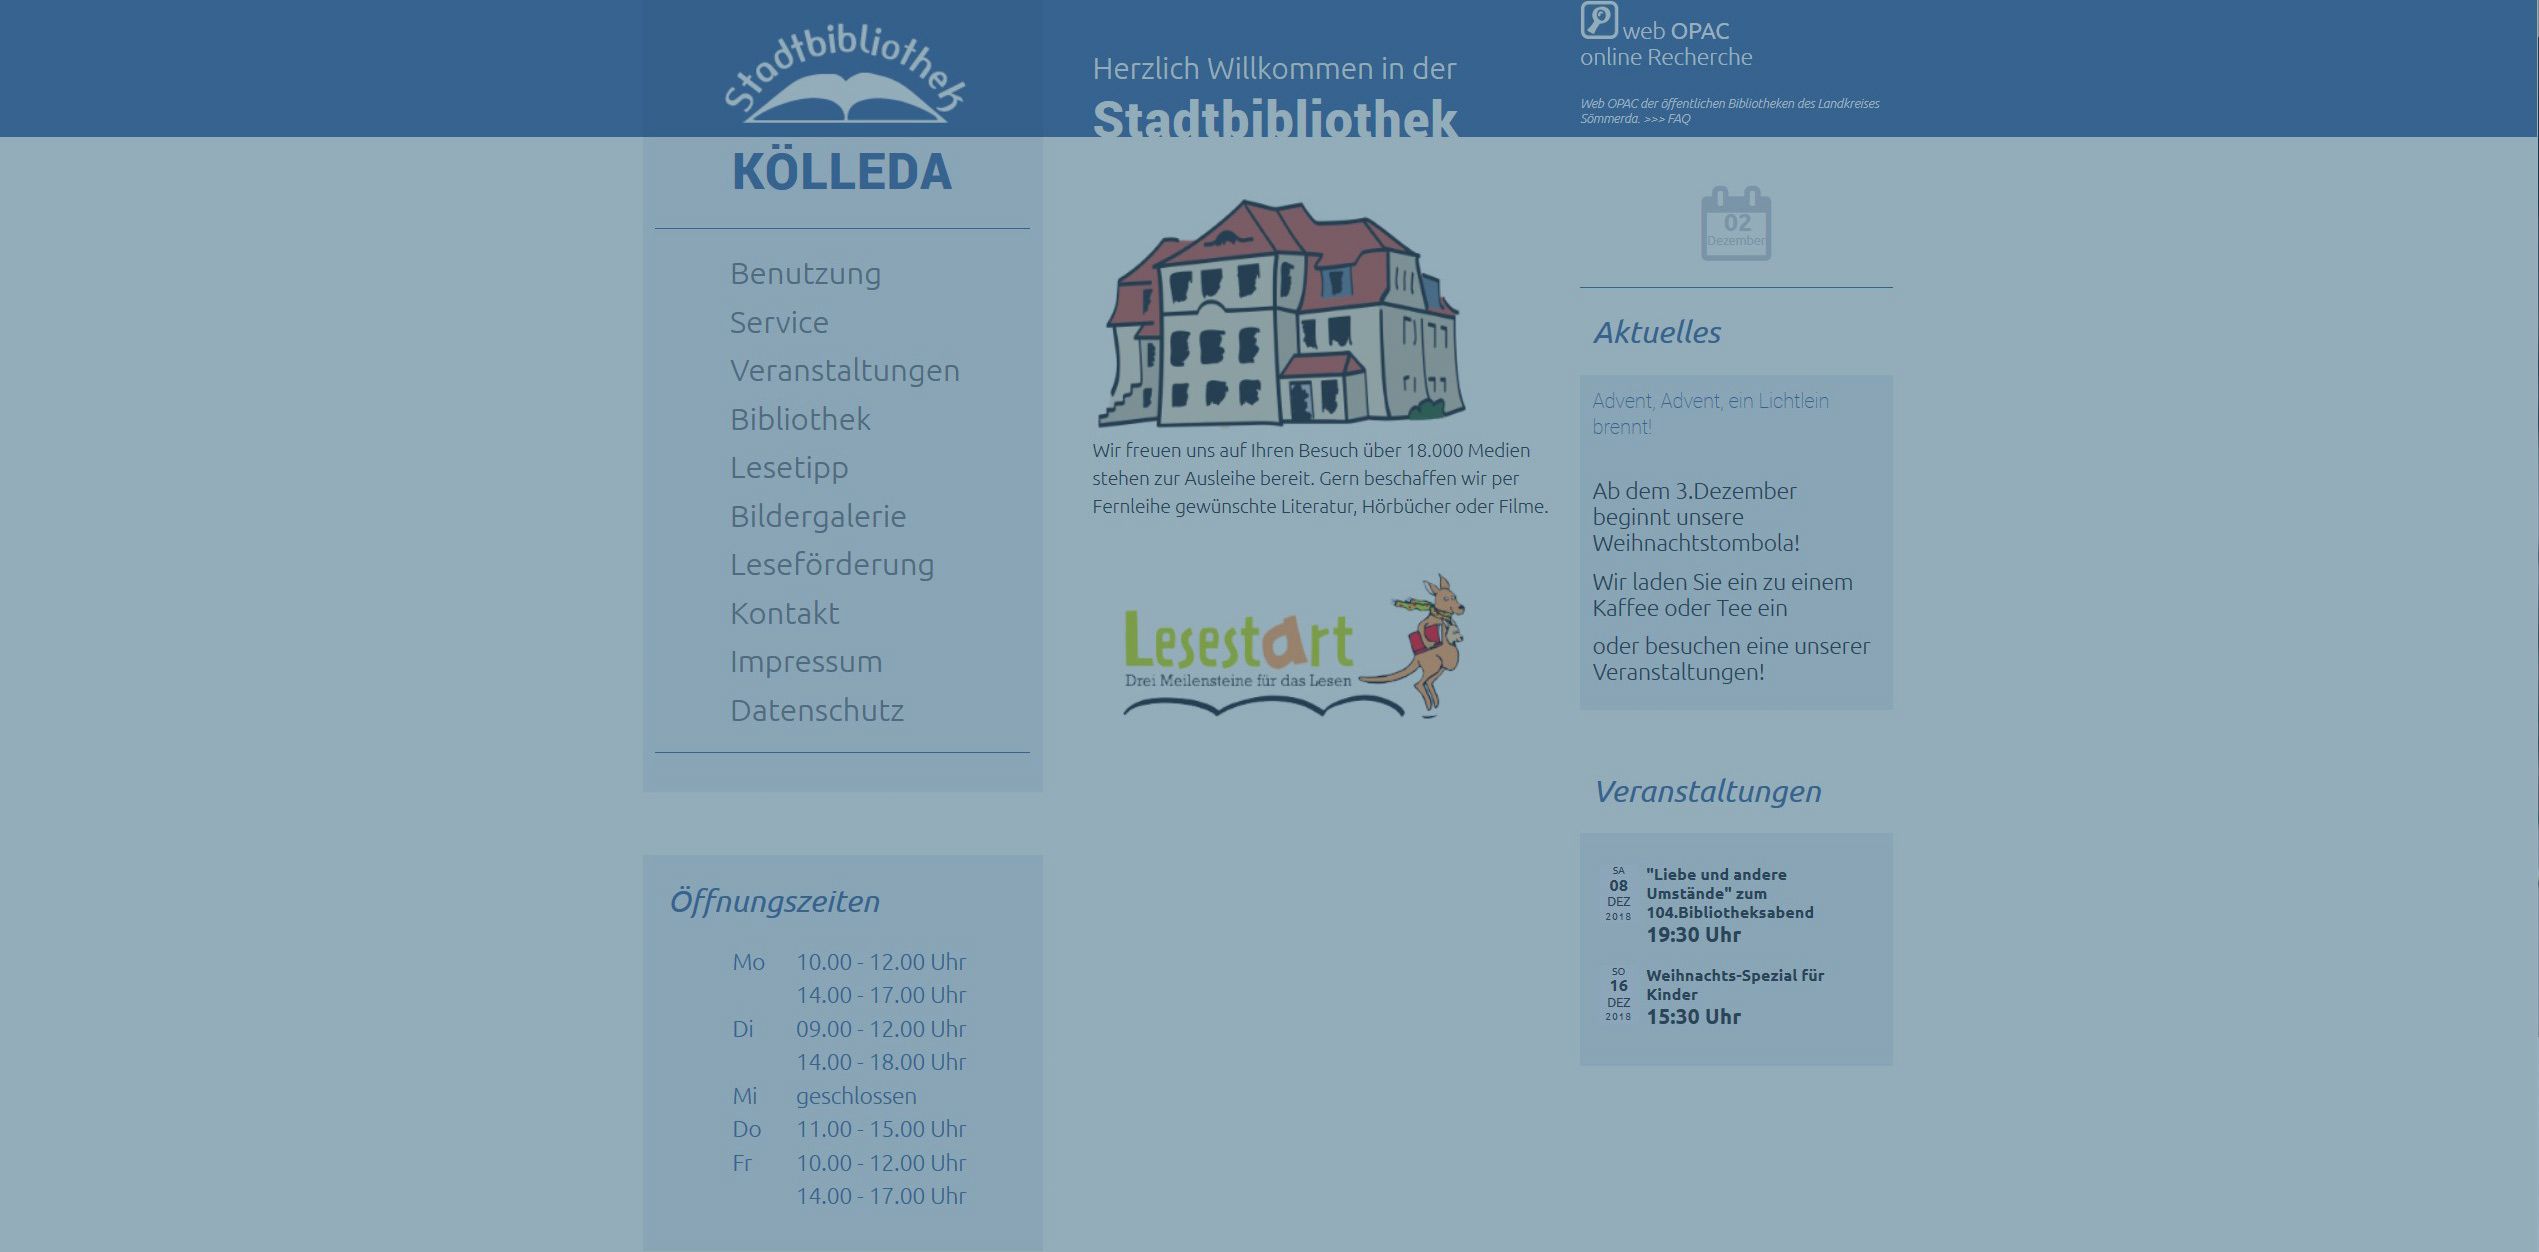 Stadtbibliothek Kölleda